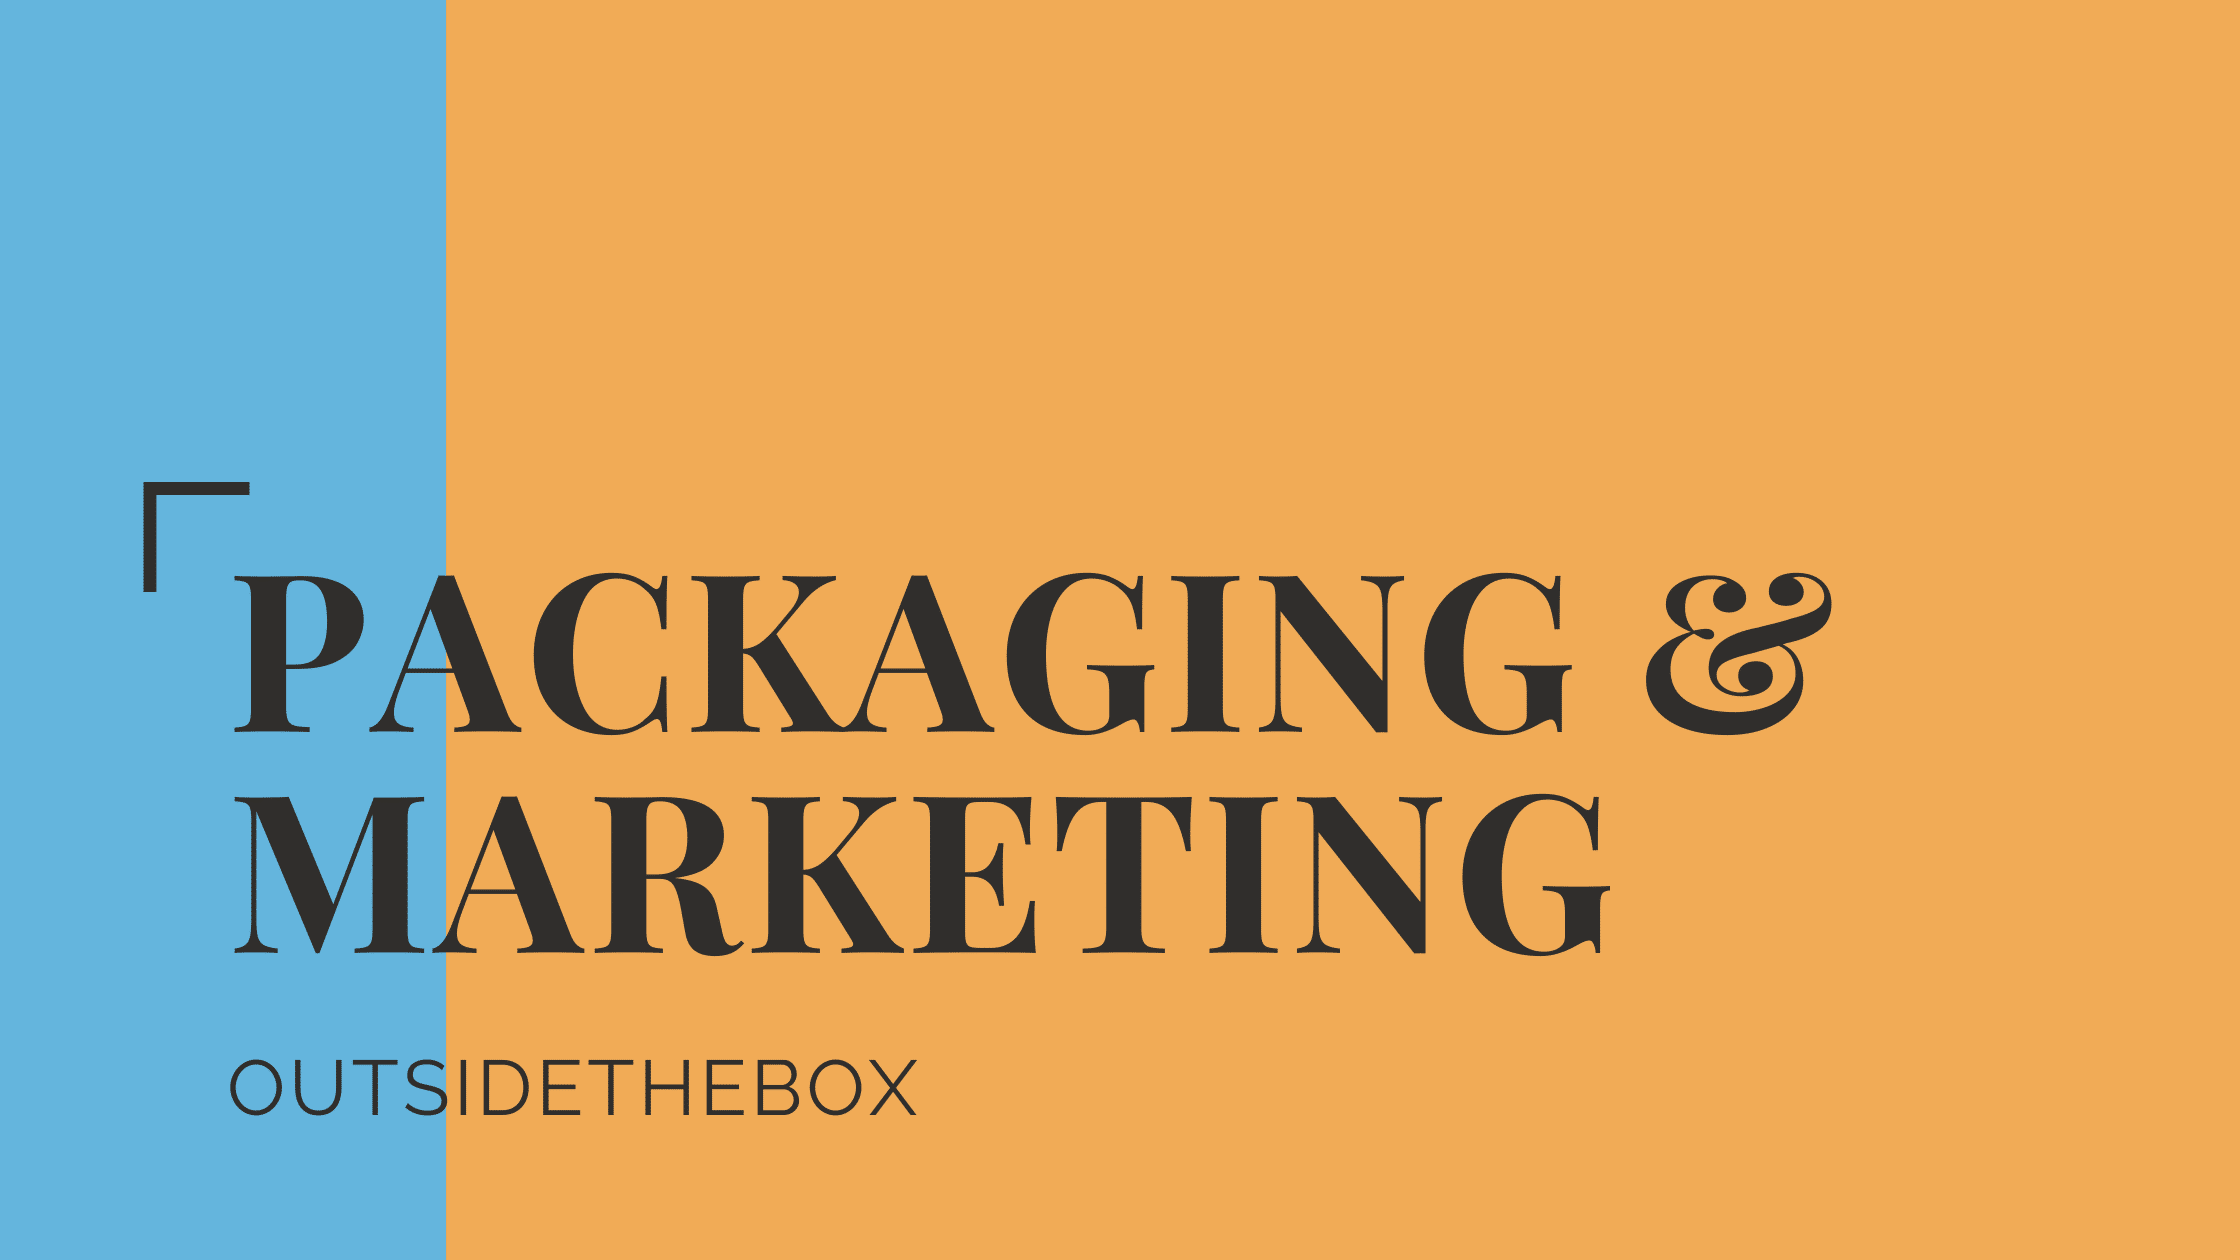 Packaging e Marketing